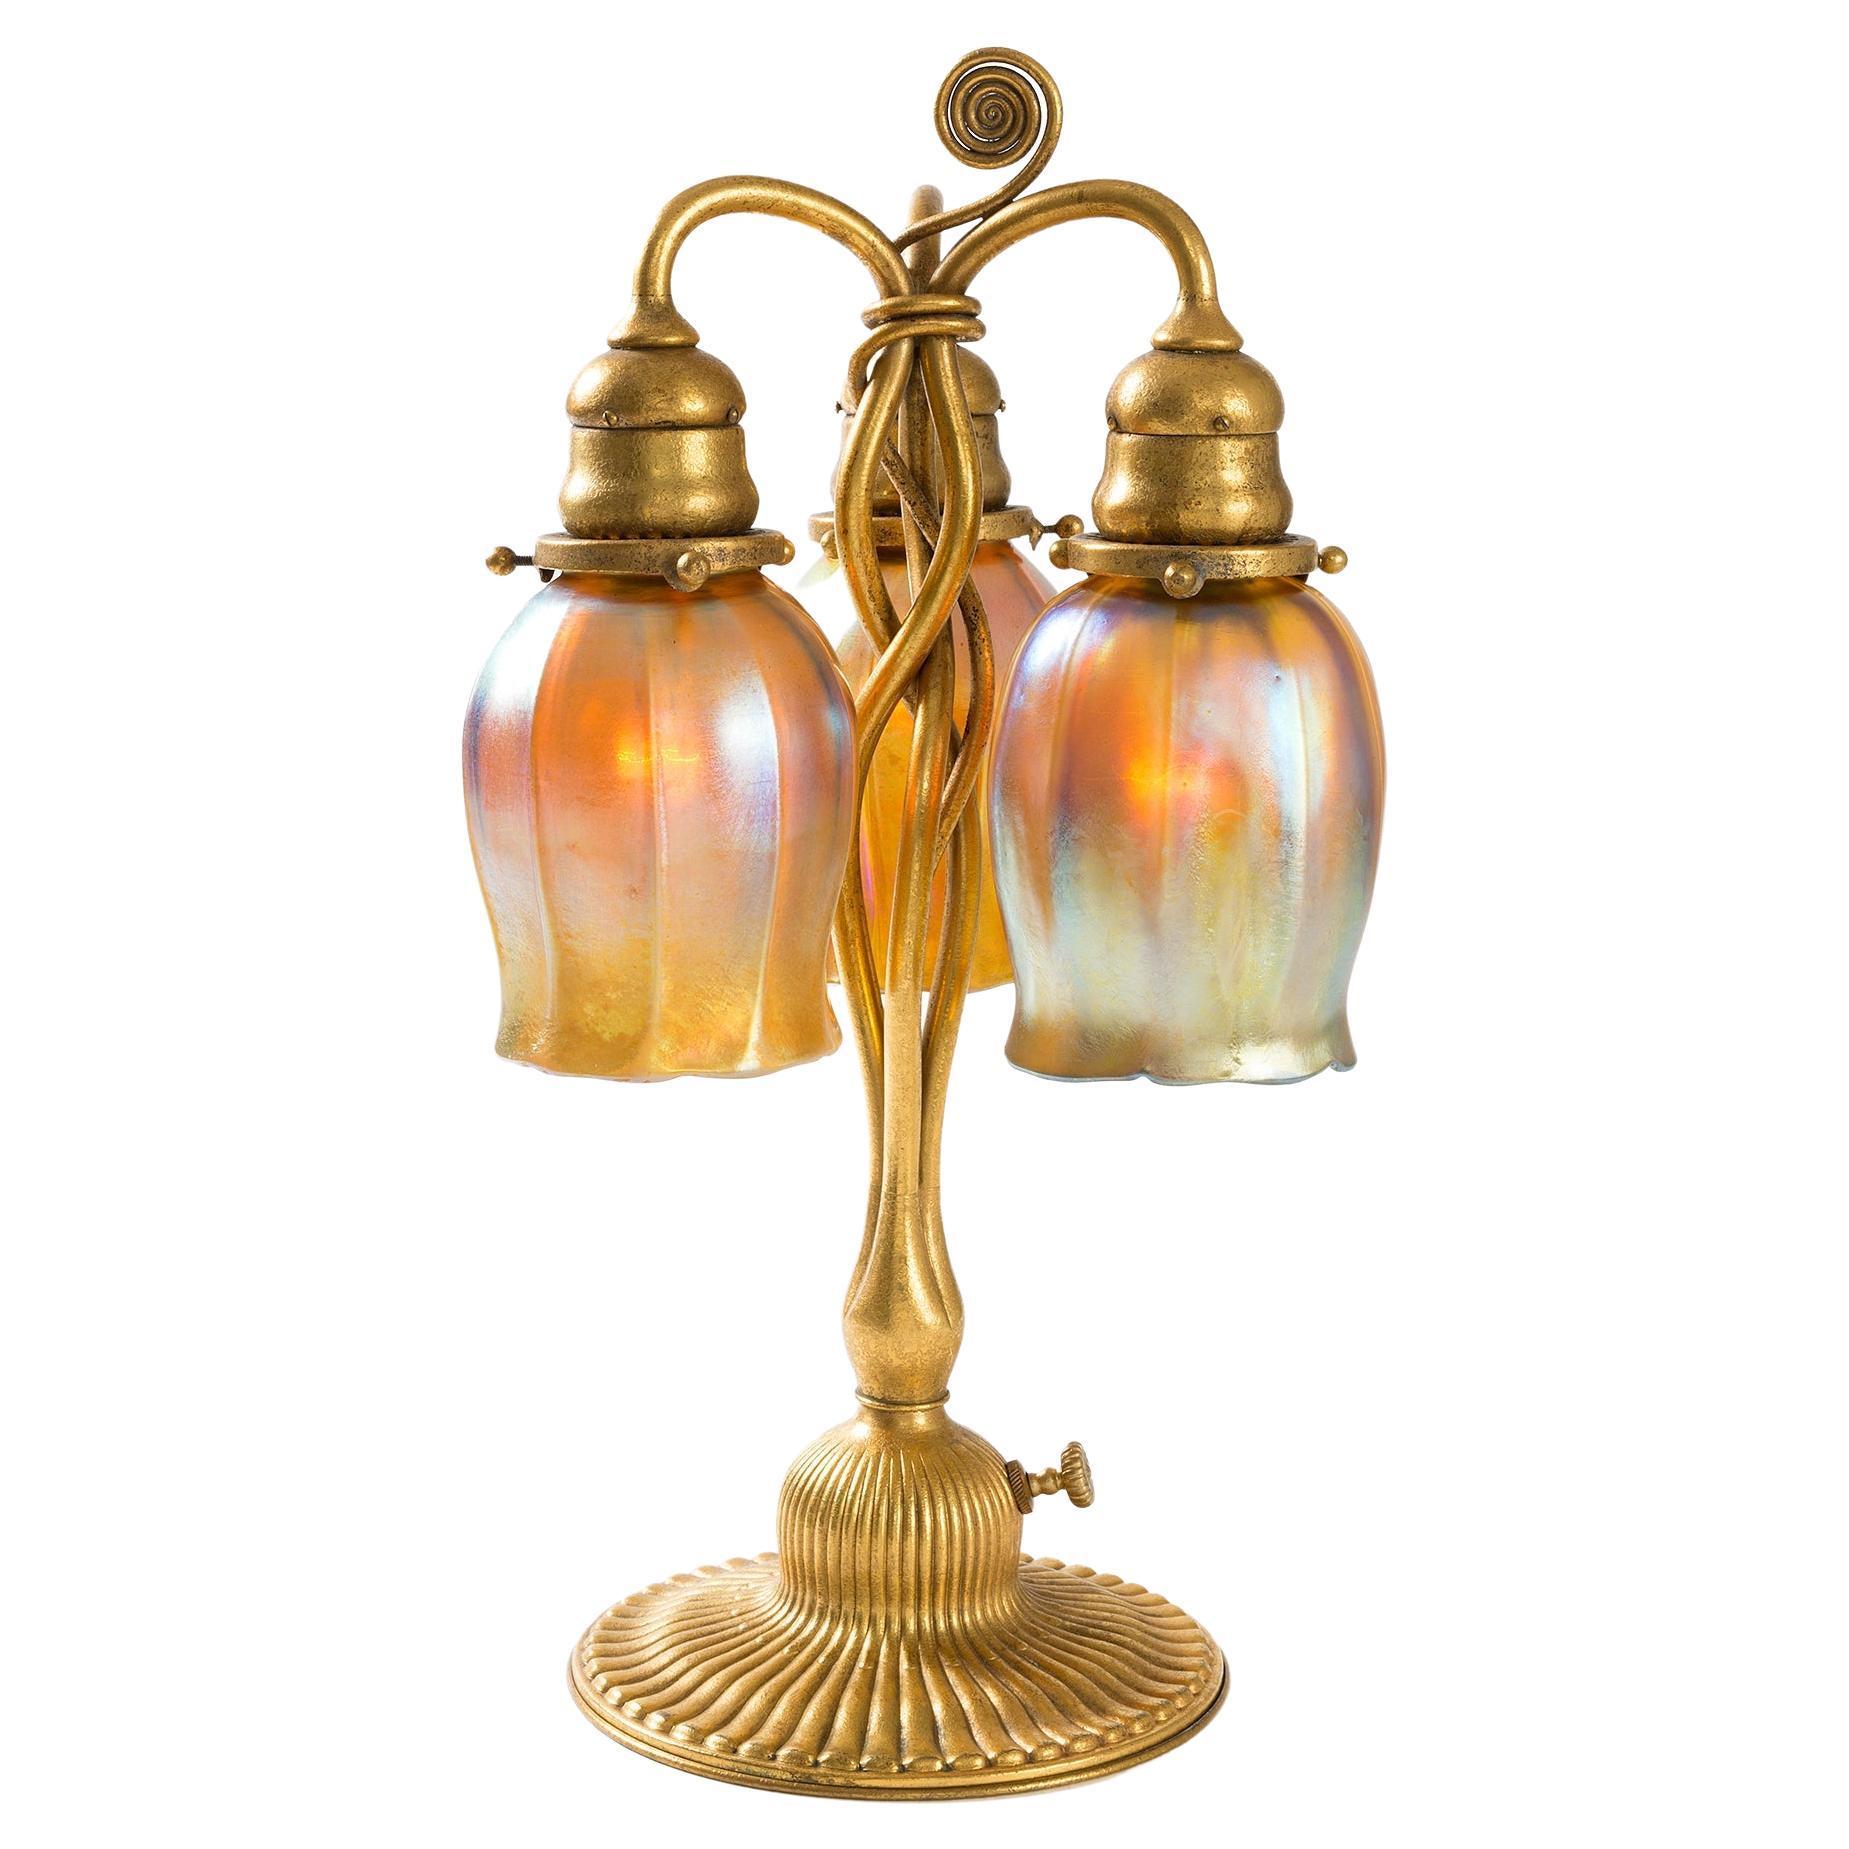 Tiffany Studios New York "Newell Post" Favrile Glass Desk Lamp For Sale